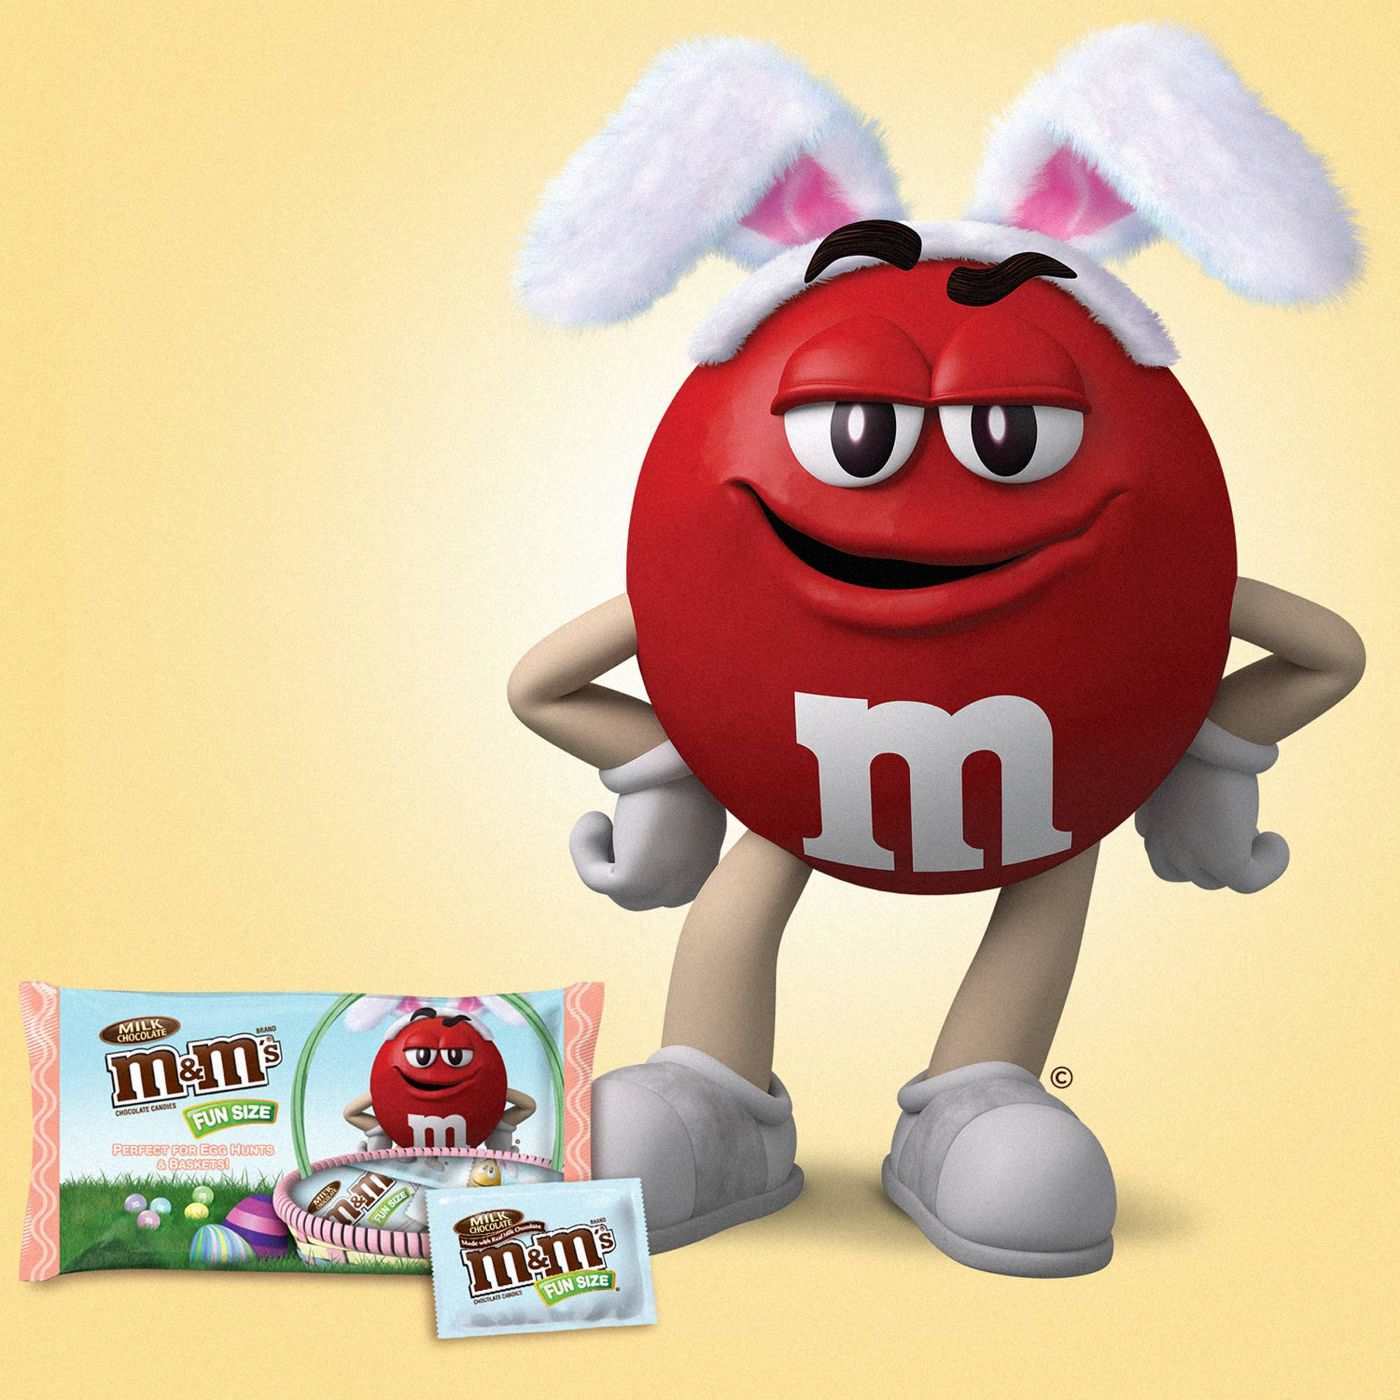 M&M's Milk Chocolate Fun Size Easter Candies, 10.53oz